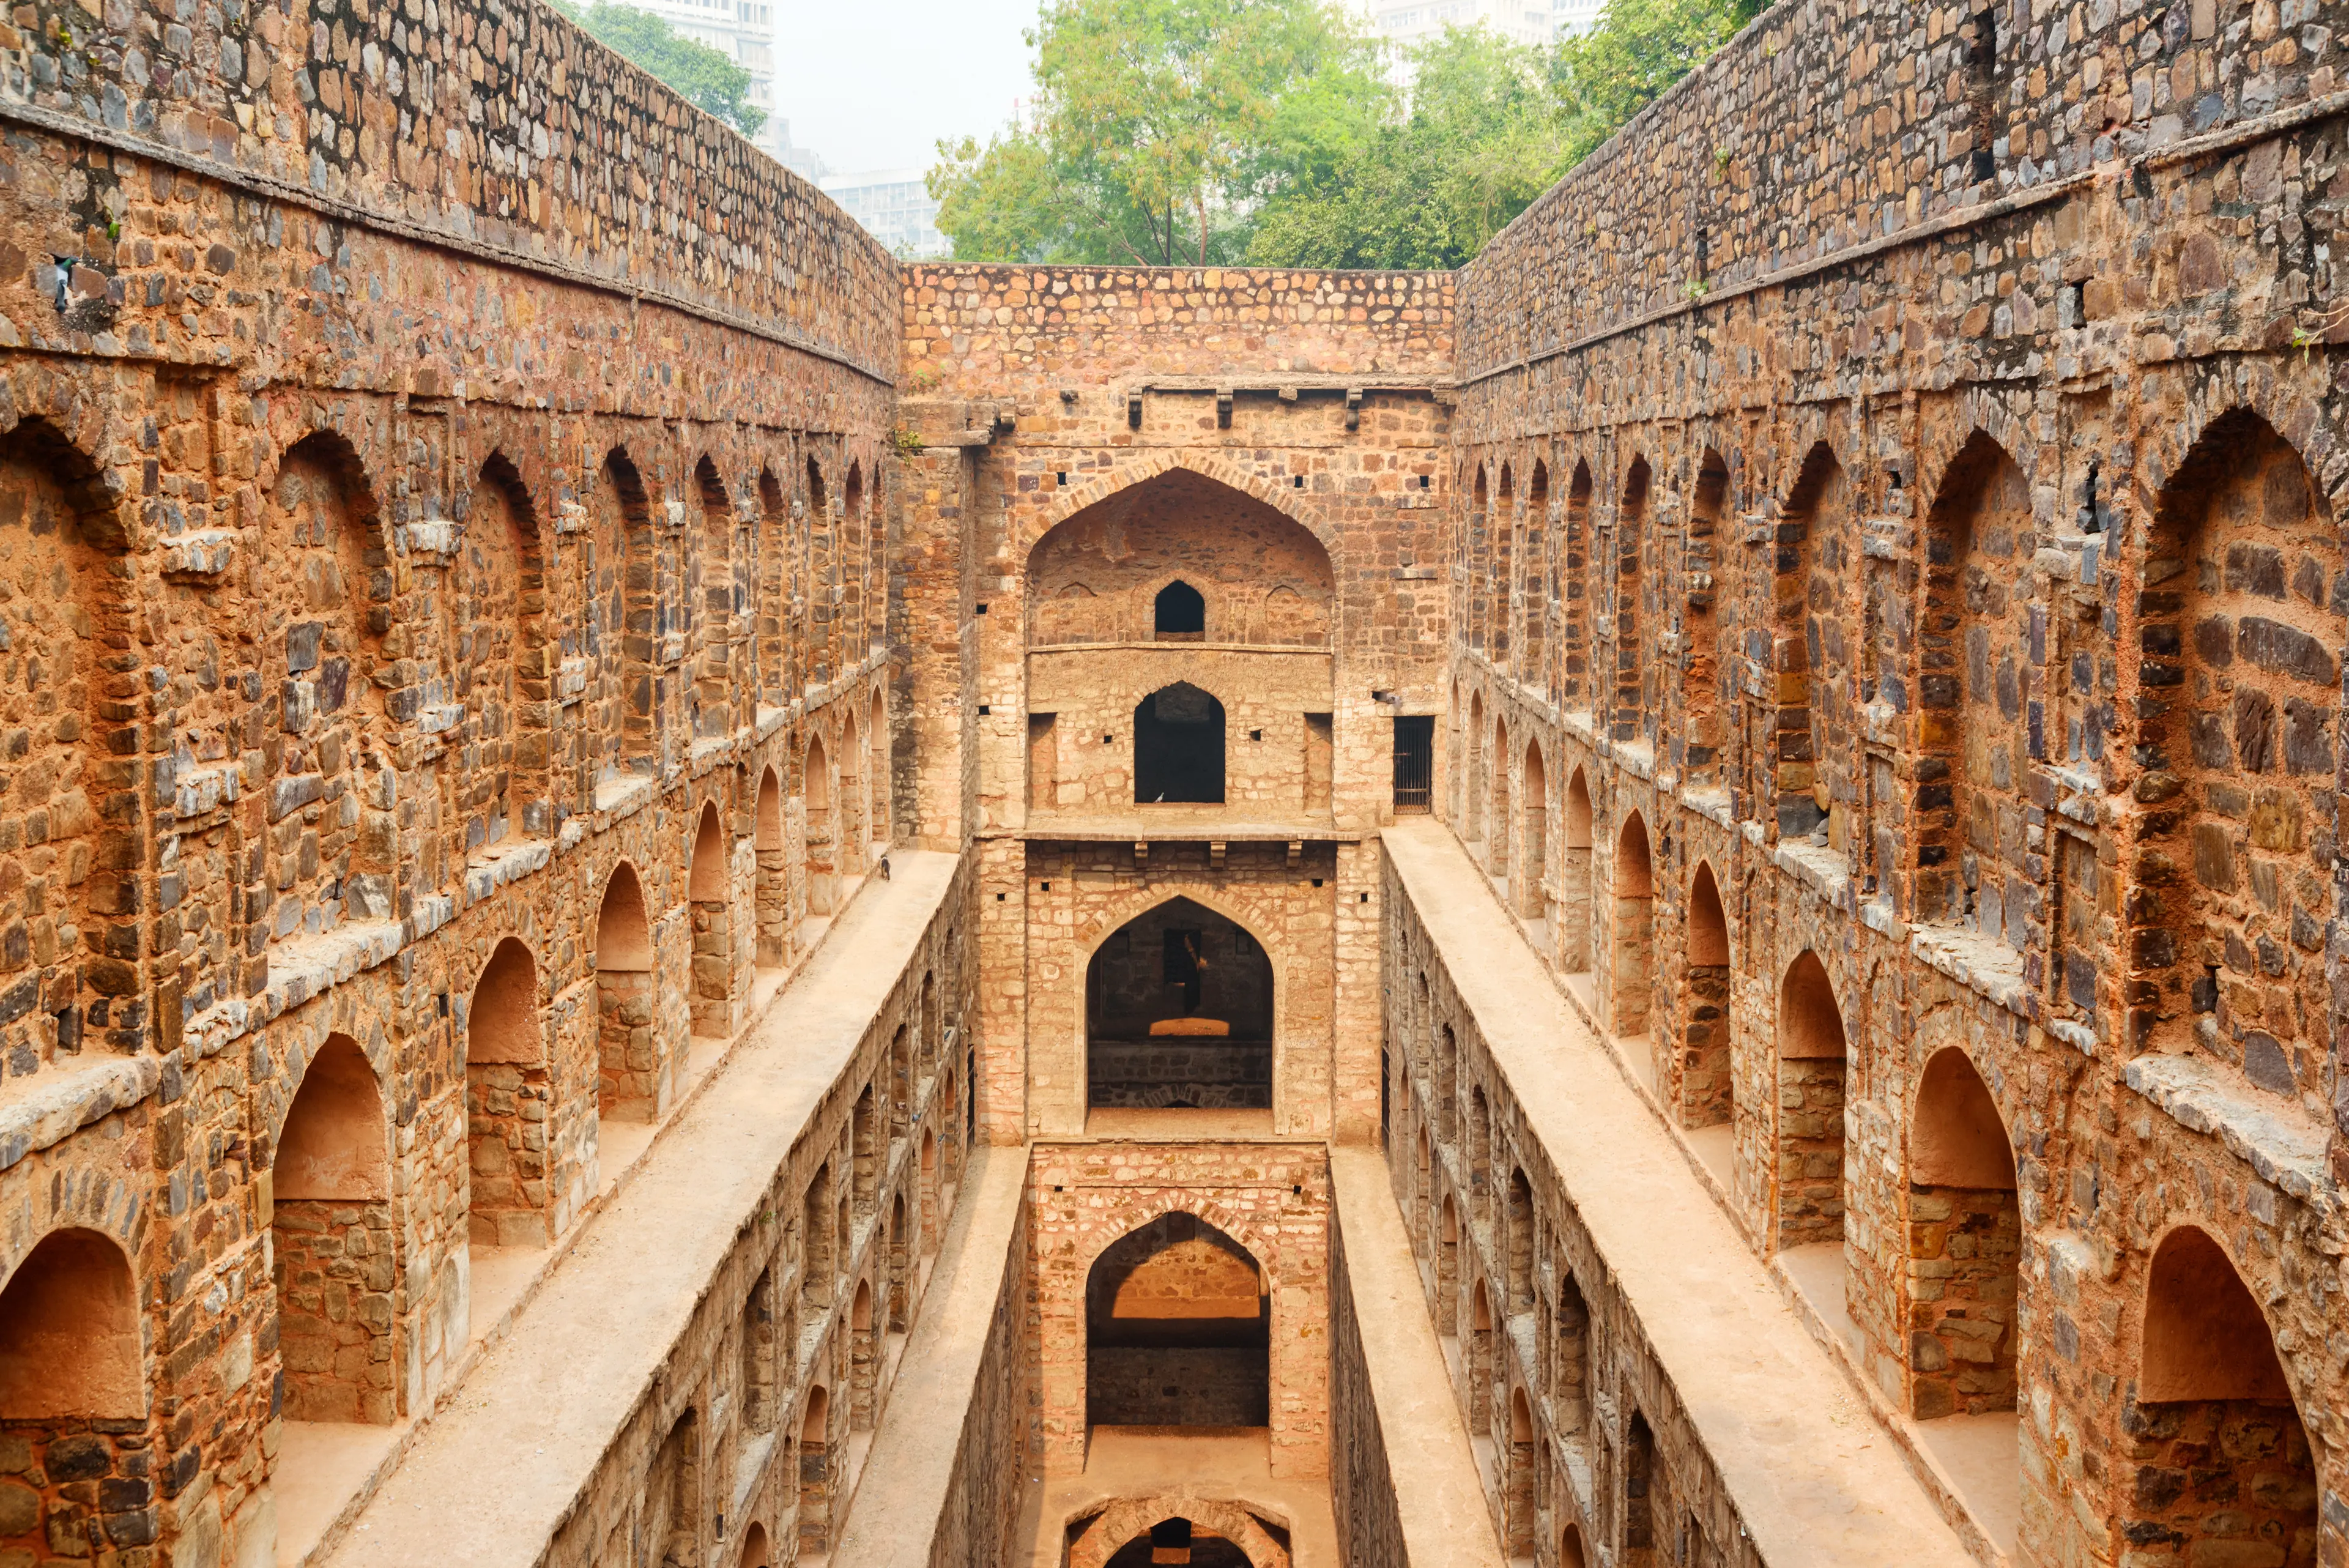 1-Day Adventure: Unexplored Outdoor Treasures of Delhi, India